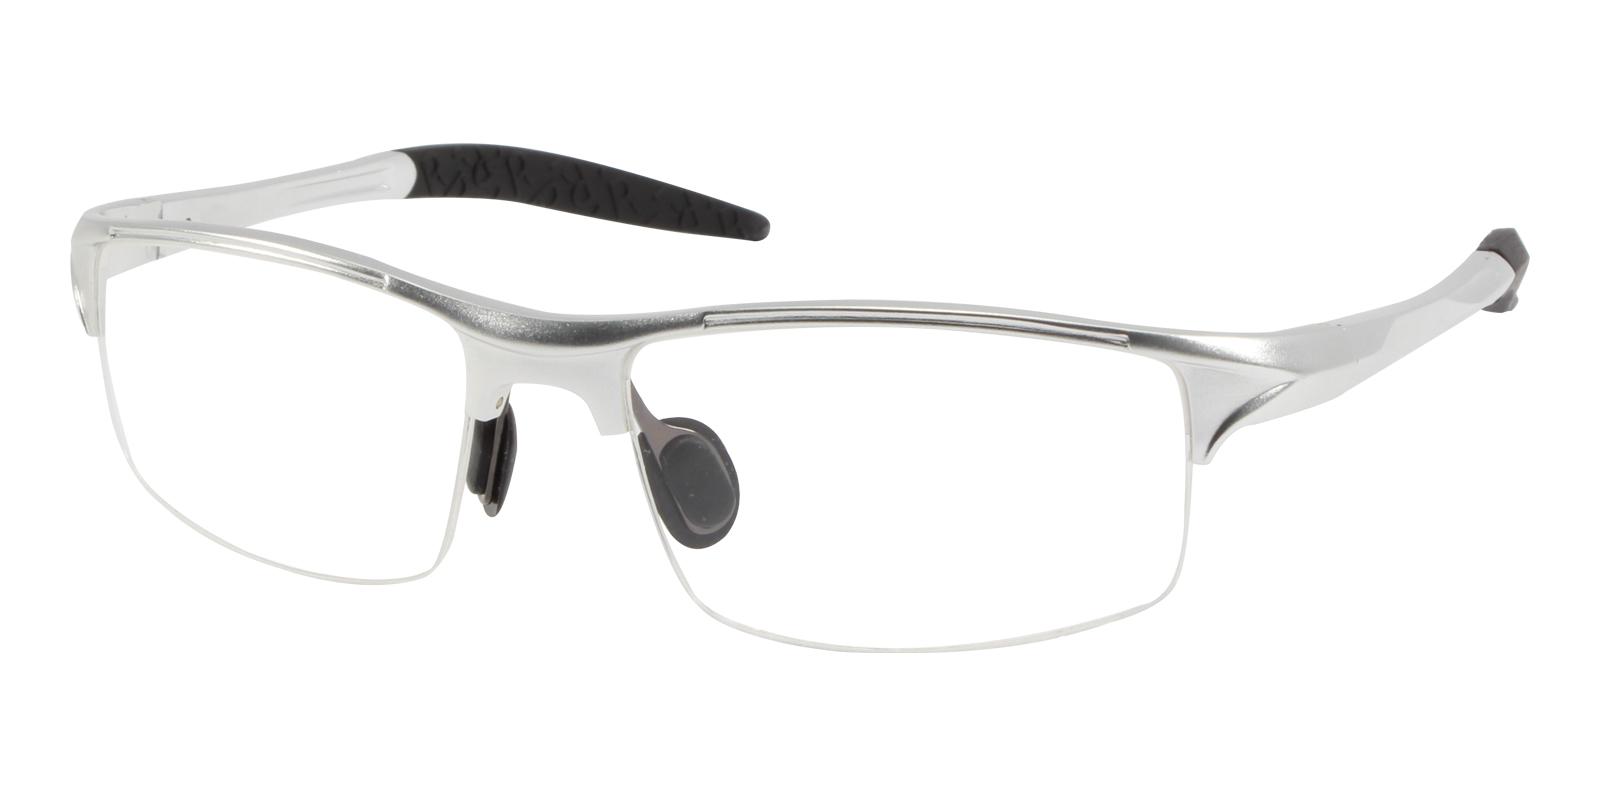 Surveyor Silver Metal NosePads , SportsGlasses , SpringHinges Frames from ABBE Glasses